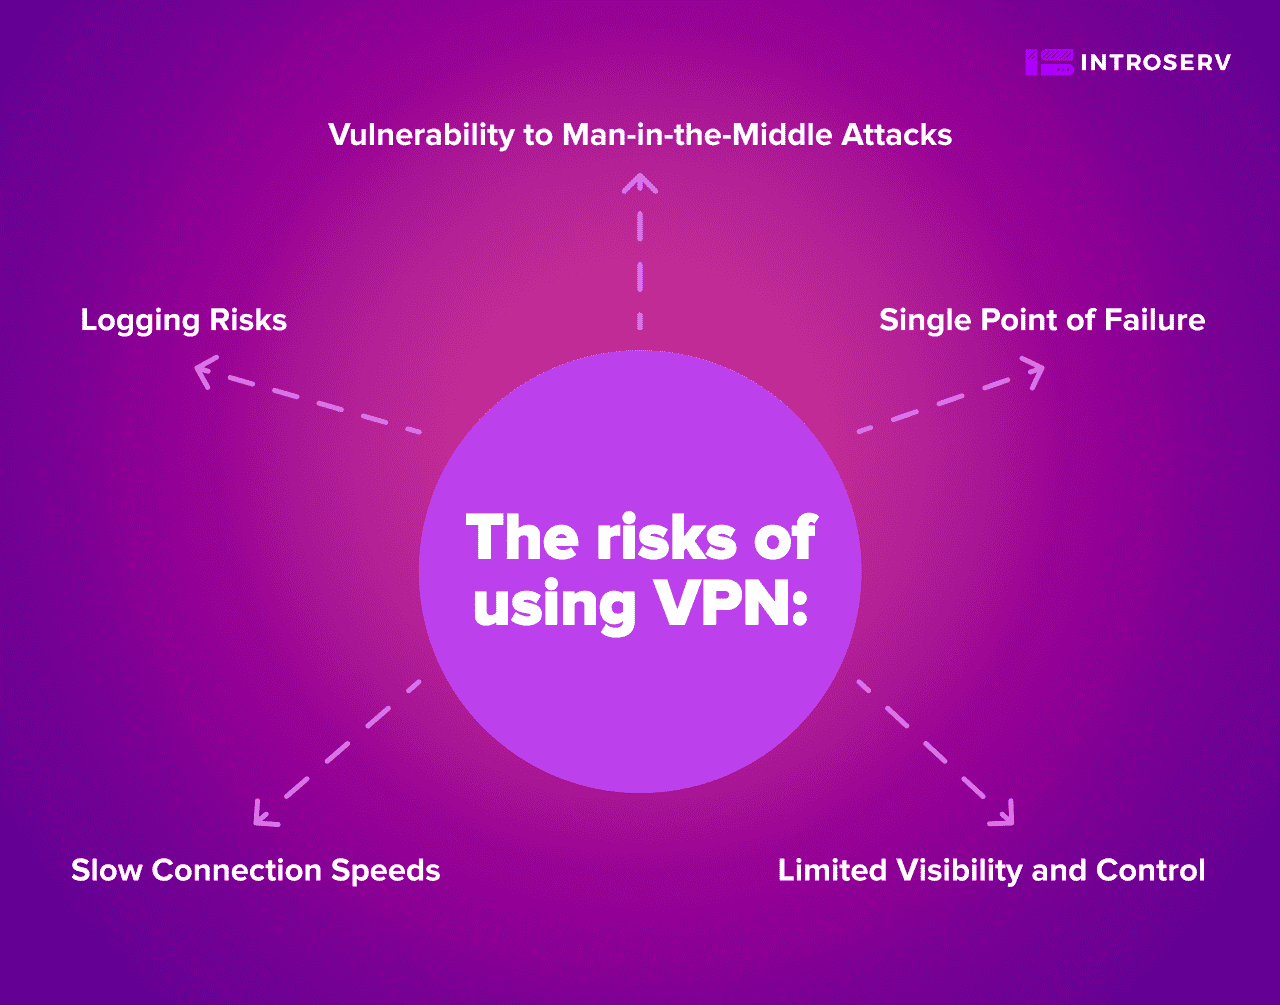 The risks of using VPN